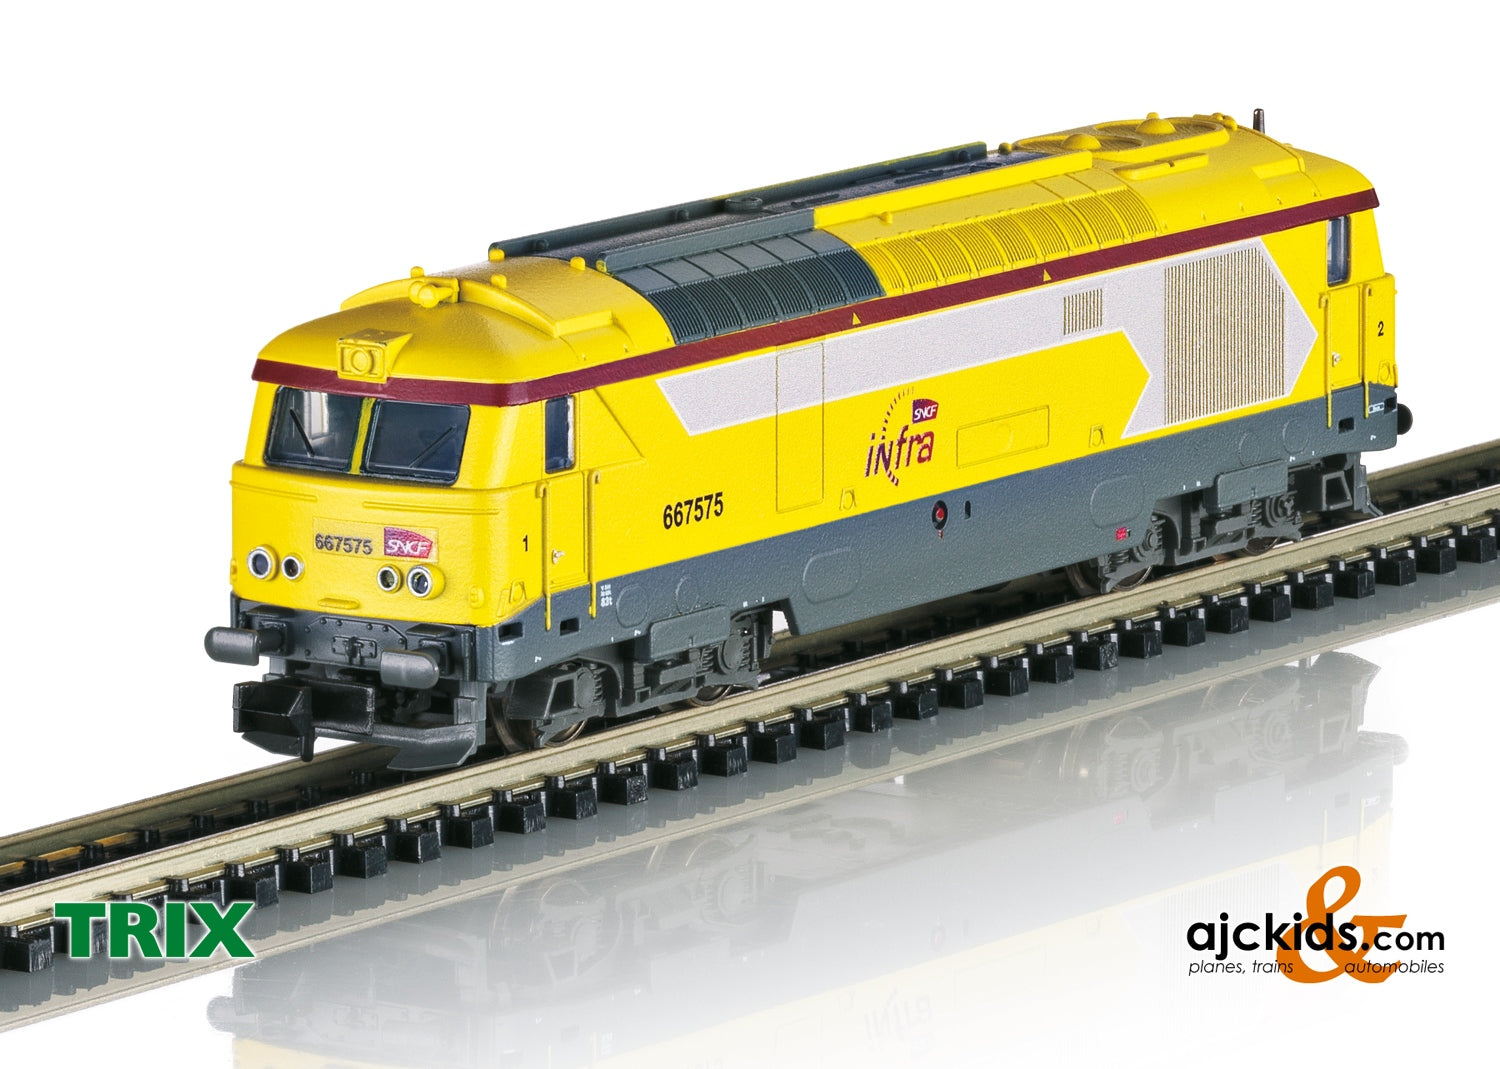 Trix 16707 Class 67400 Dieselat Ajckids.com